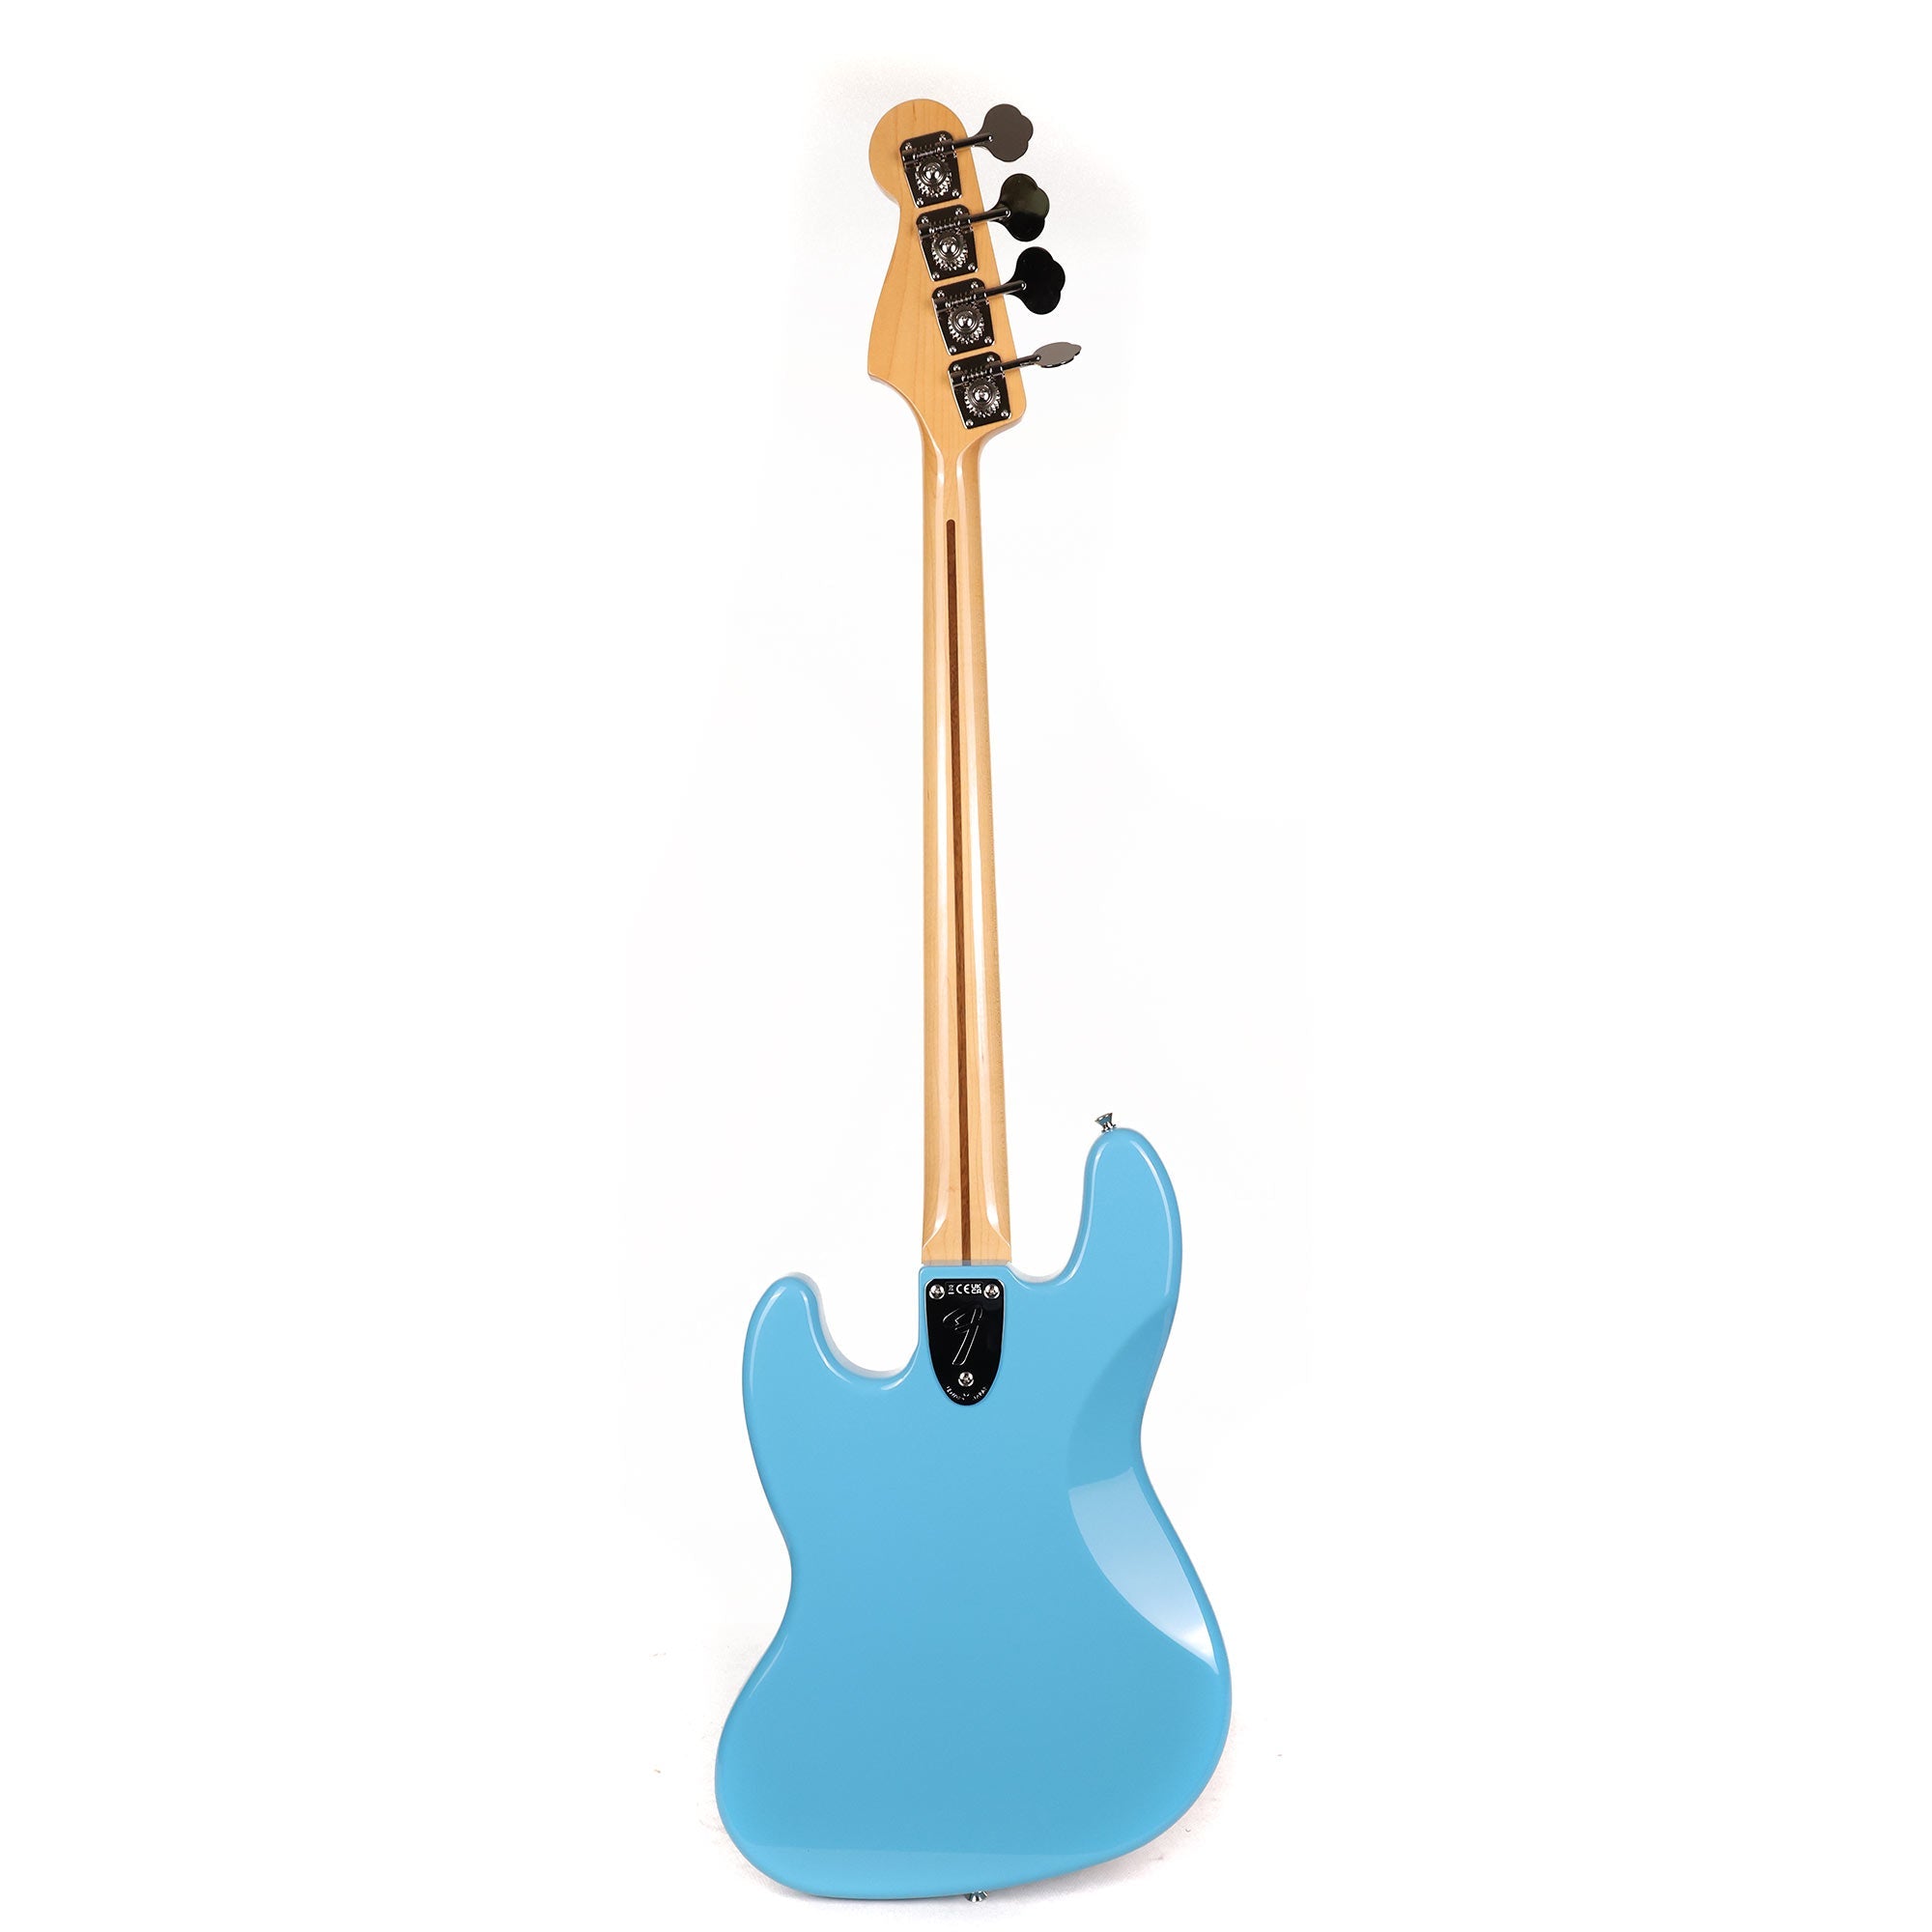 Fender Made in Japan Limited International Color Jazz Bass Maui 